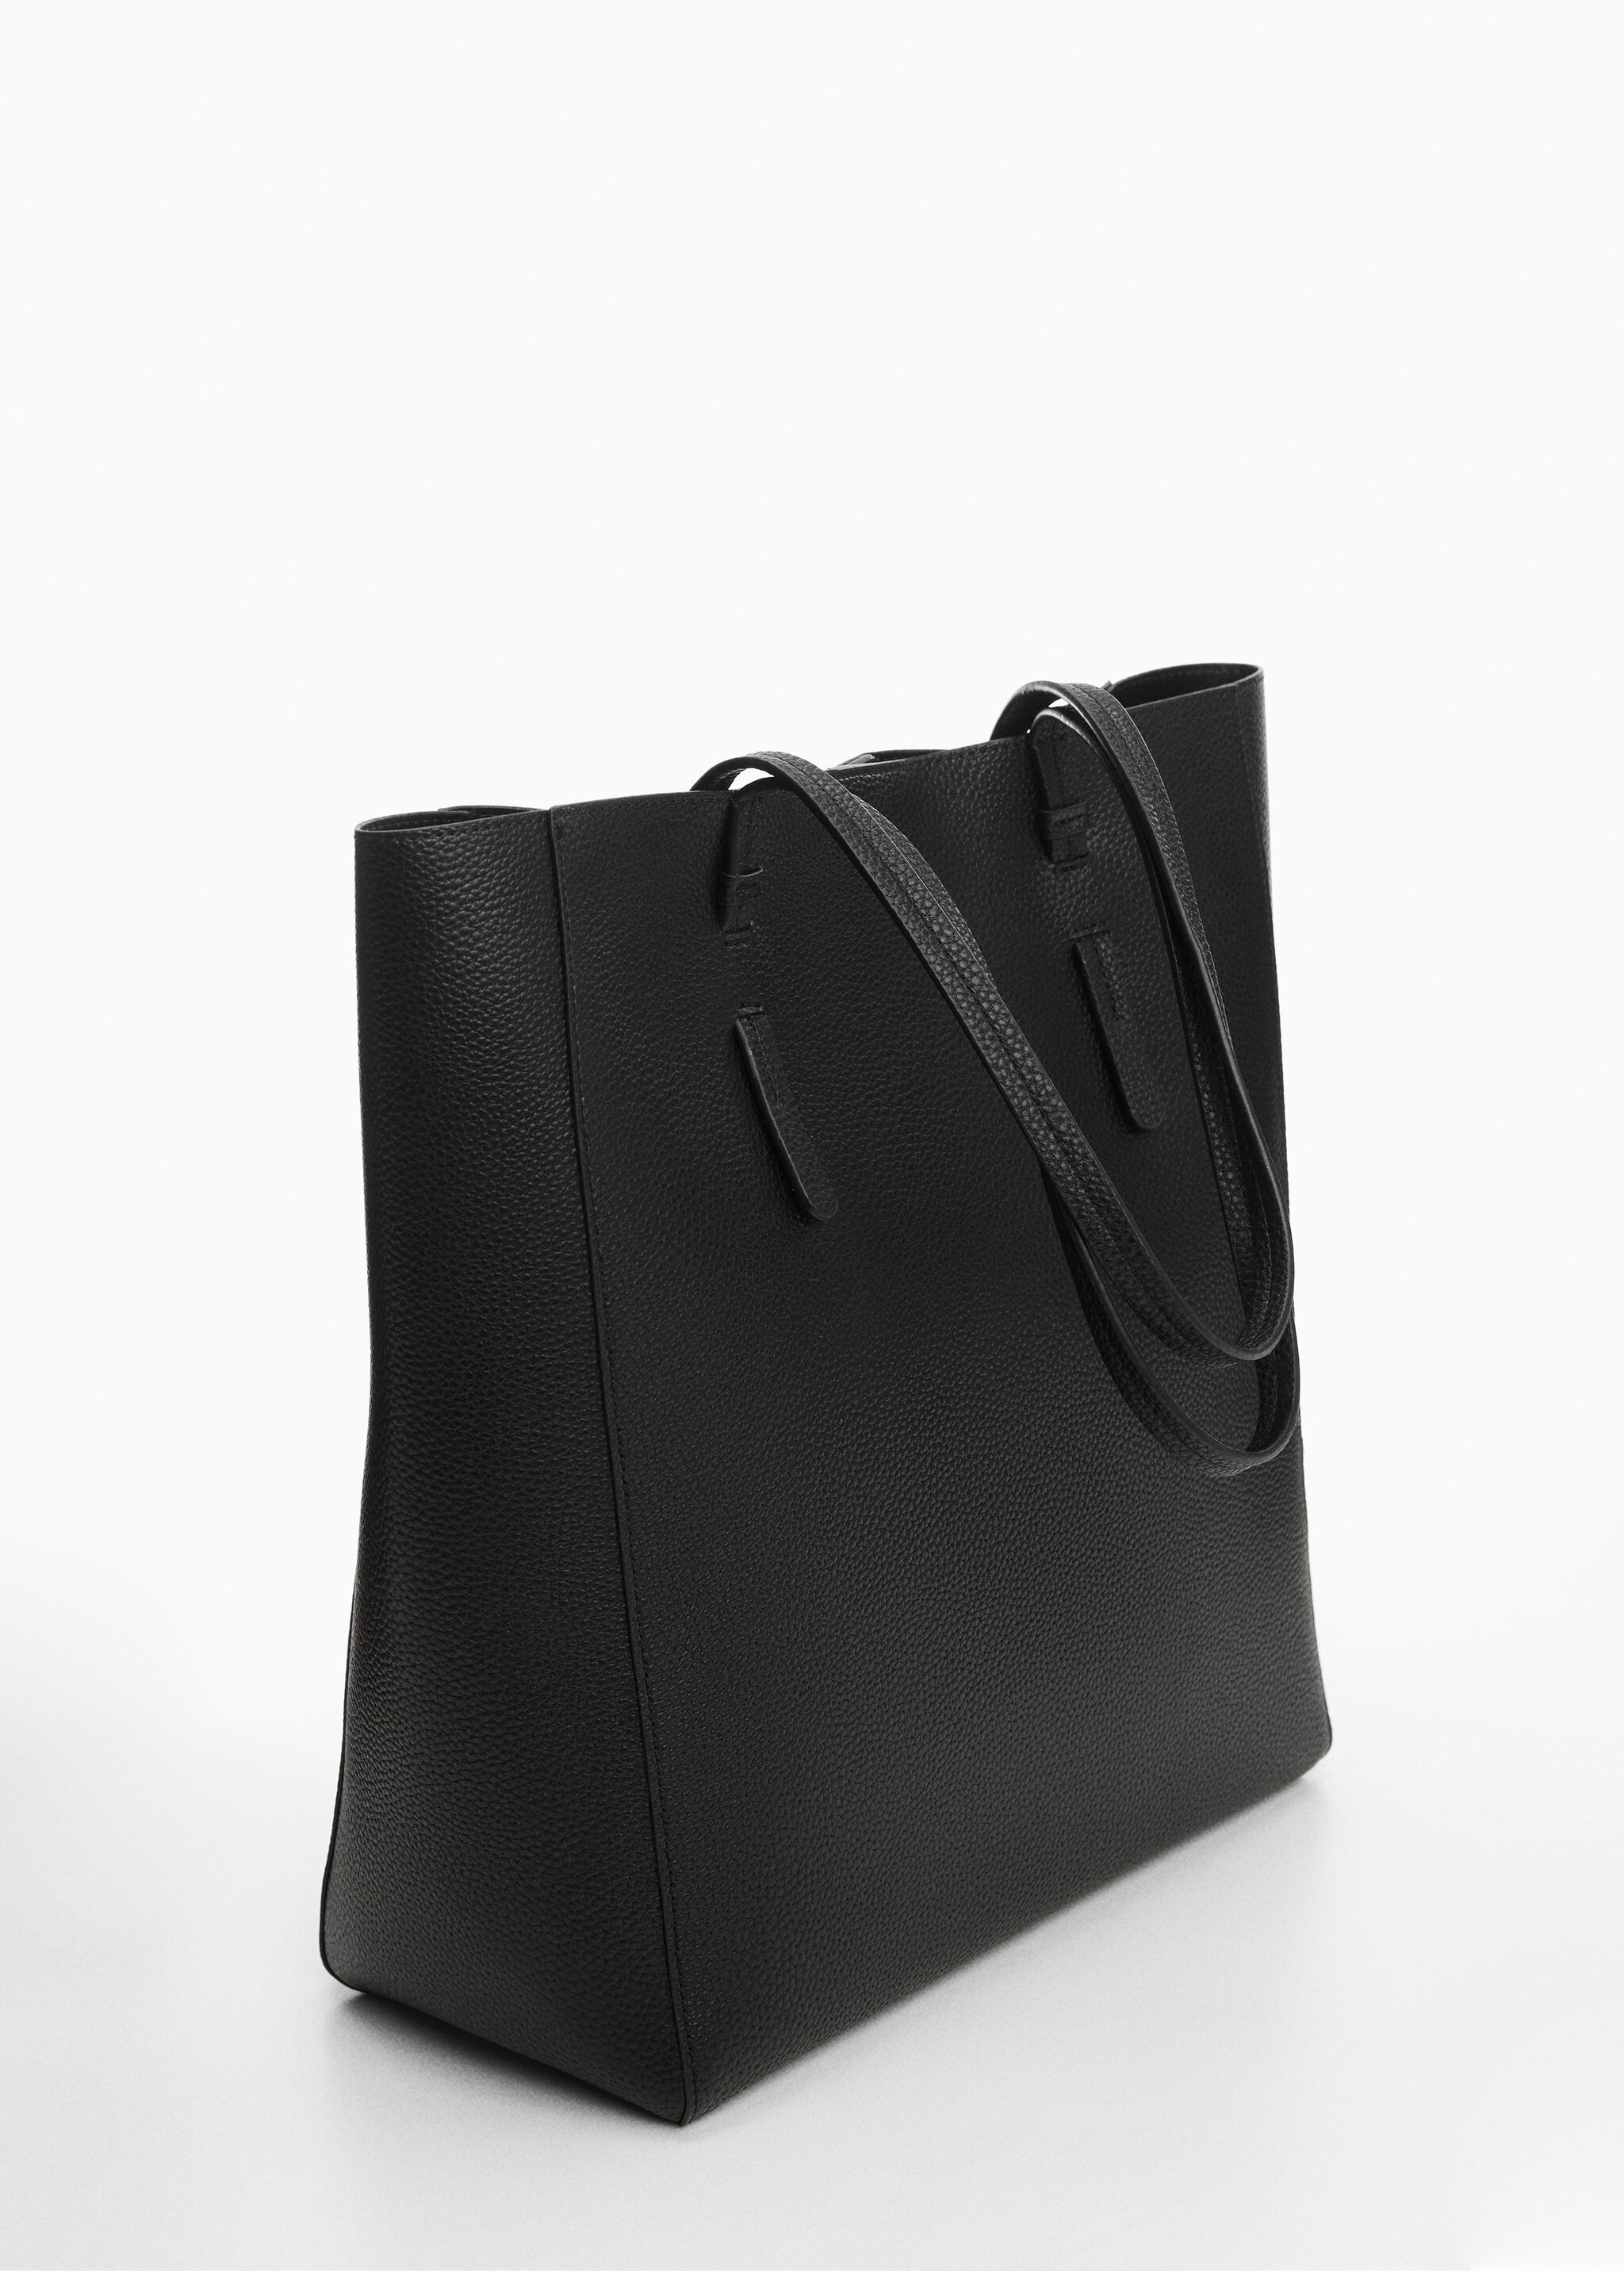 Leather-effect shopper bag - Medium plane